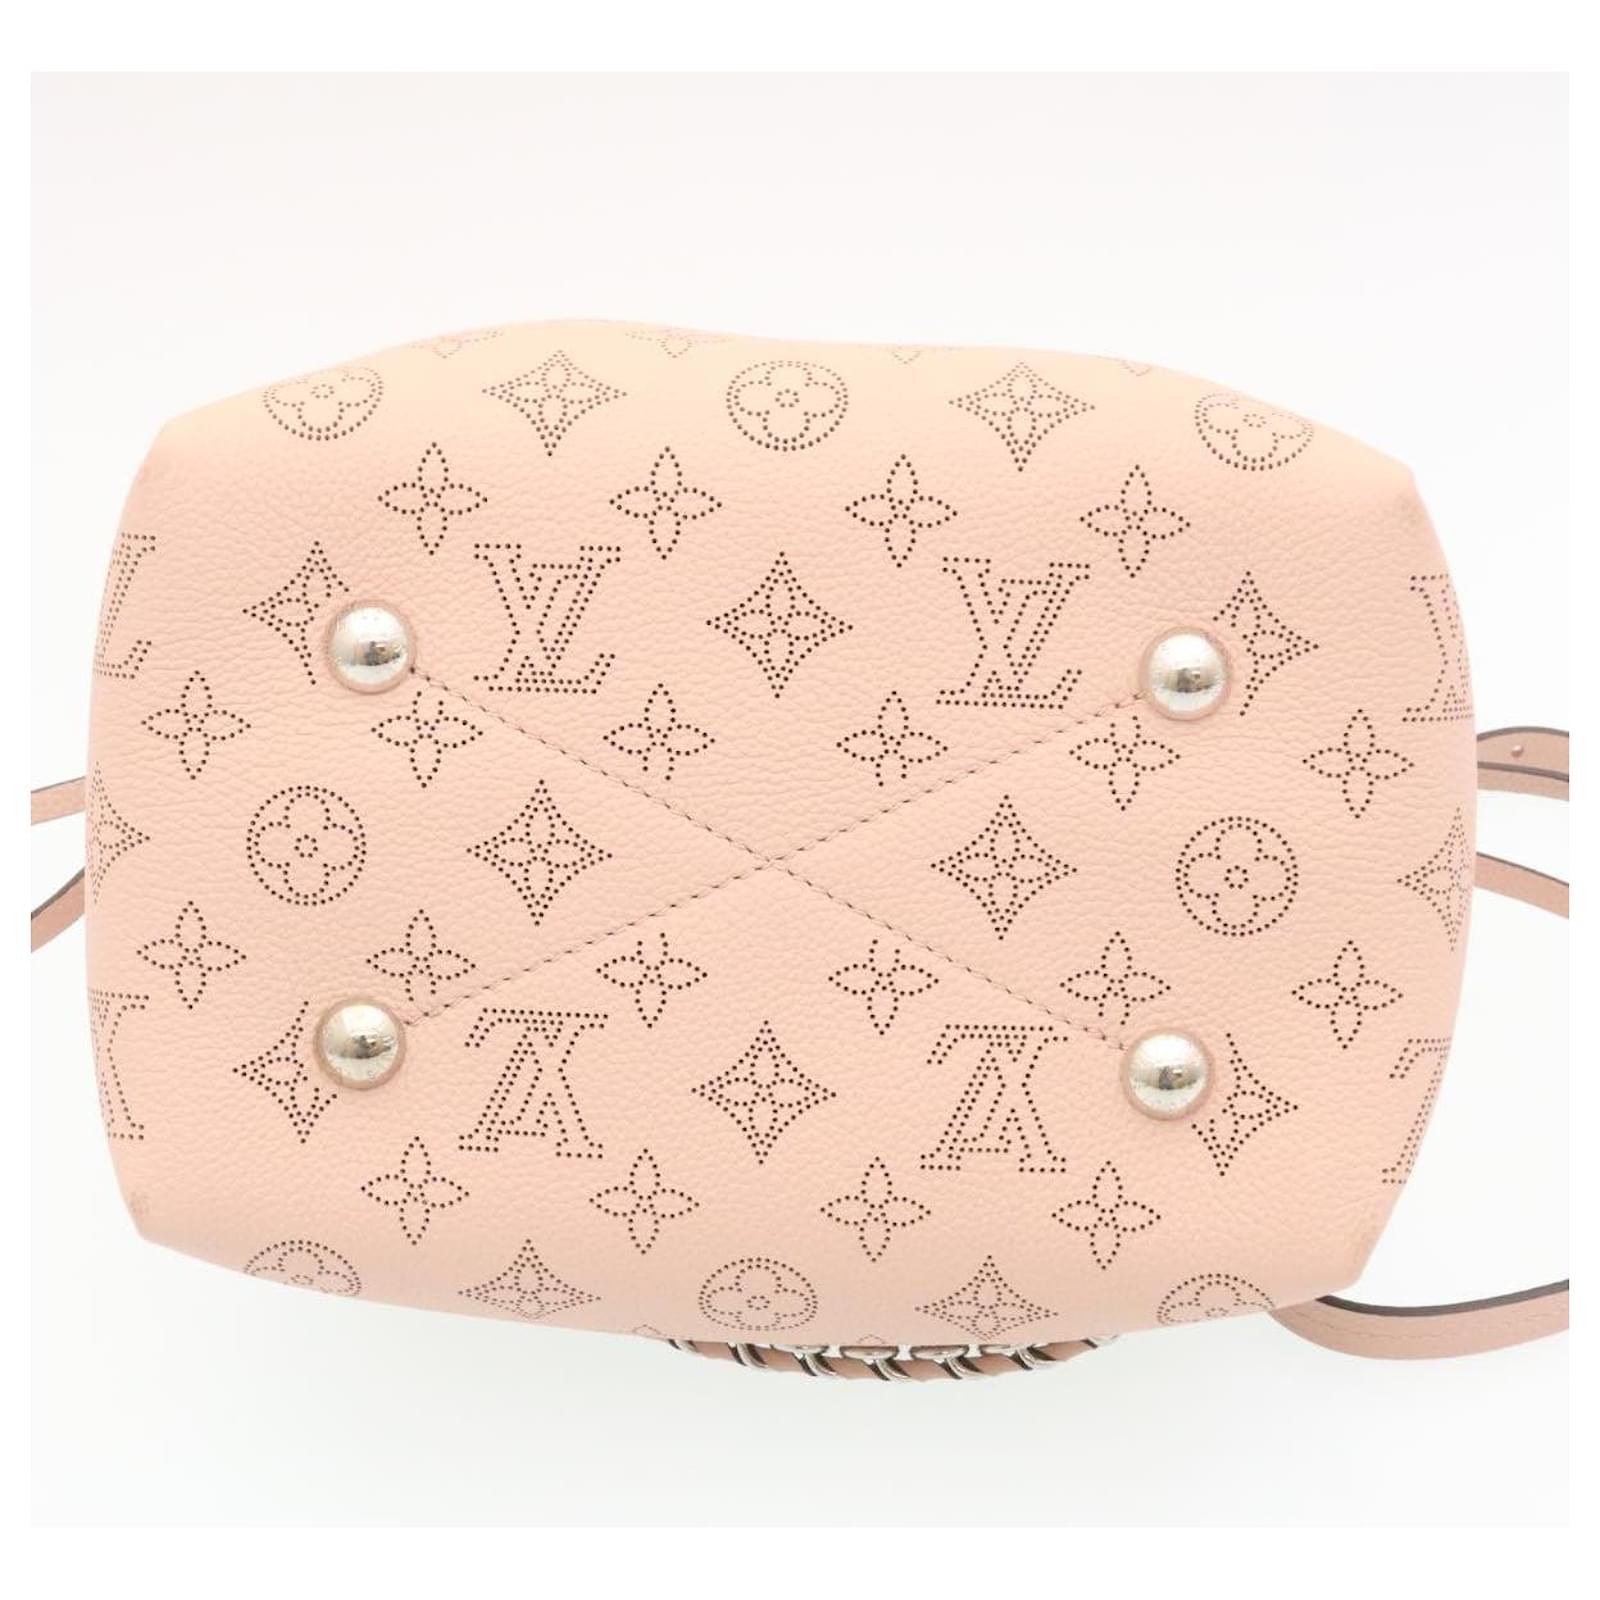 LOUIS VUITTON Monogram Mahina Bella Hand Bag Pink M57068 LV Auth